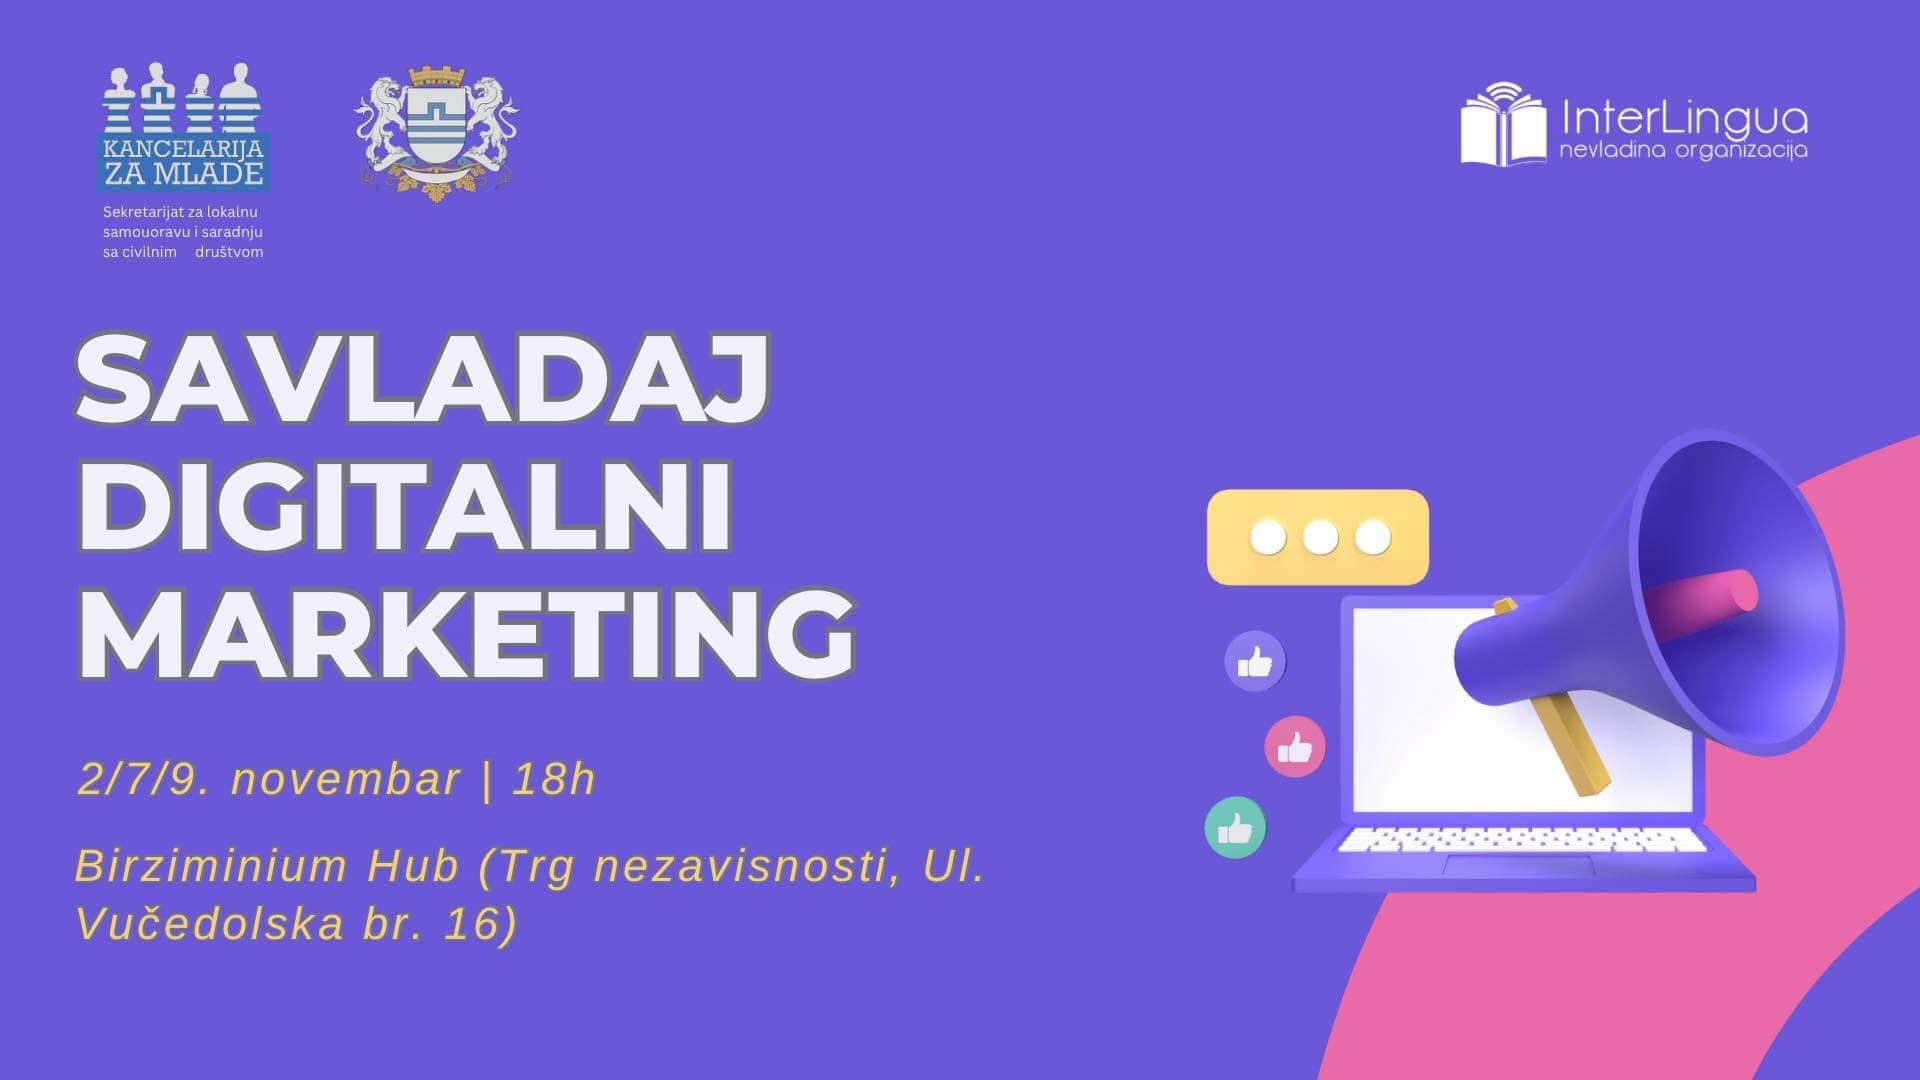 Three-day digital marketing course in Podgorica